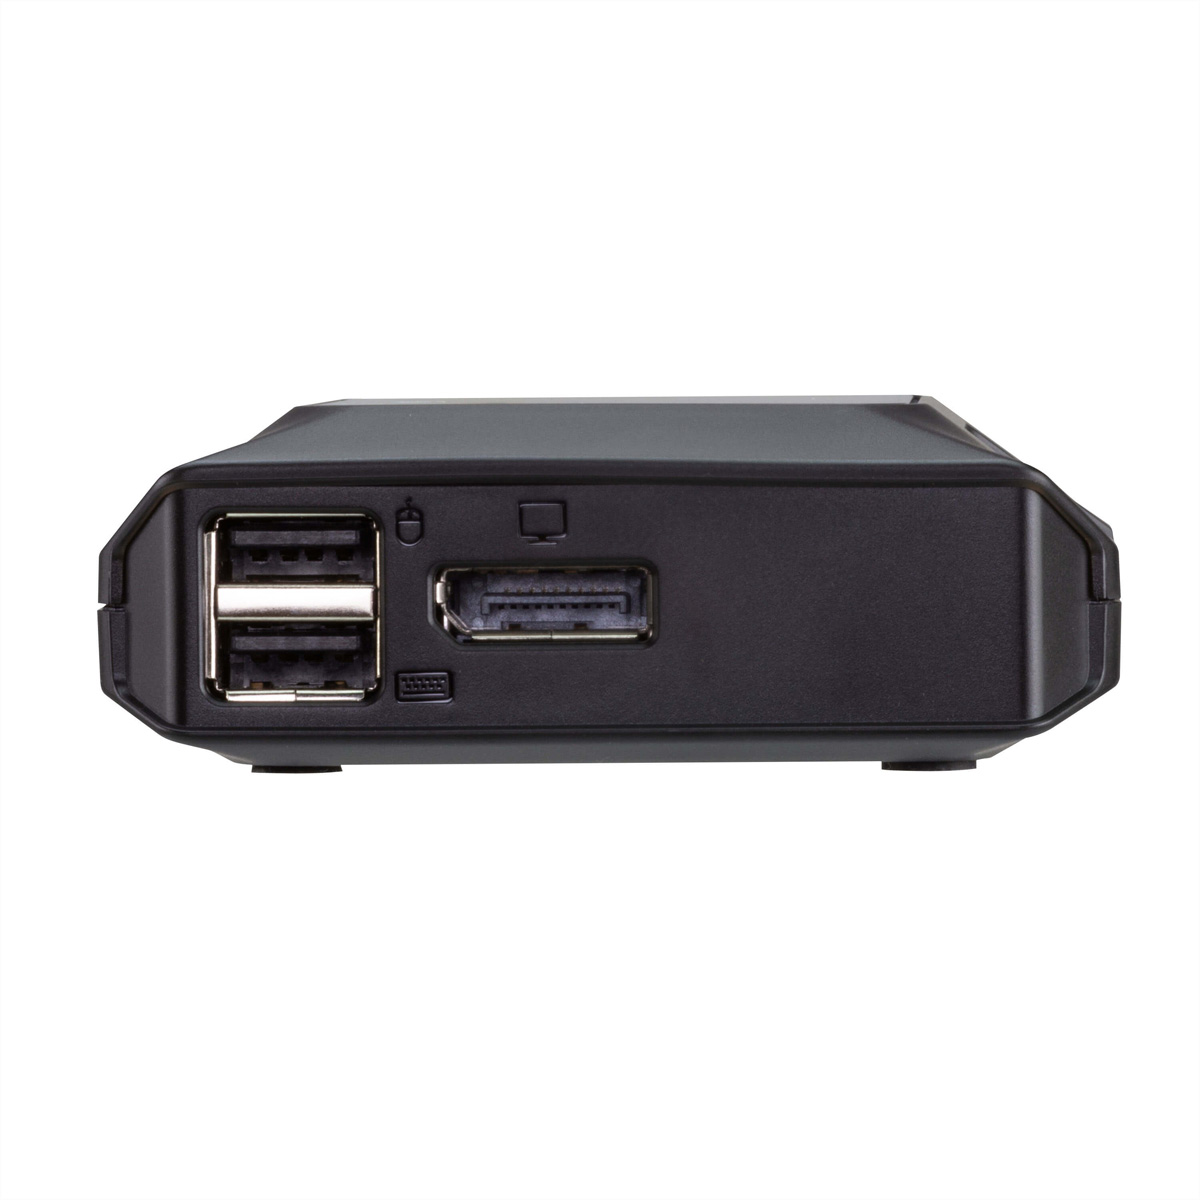 ATEN US3312 2-Port USB-C KVM-Switch, KVM DP Switch 4K DisplayPort